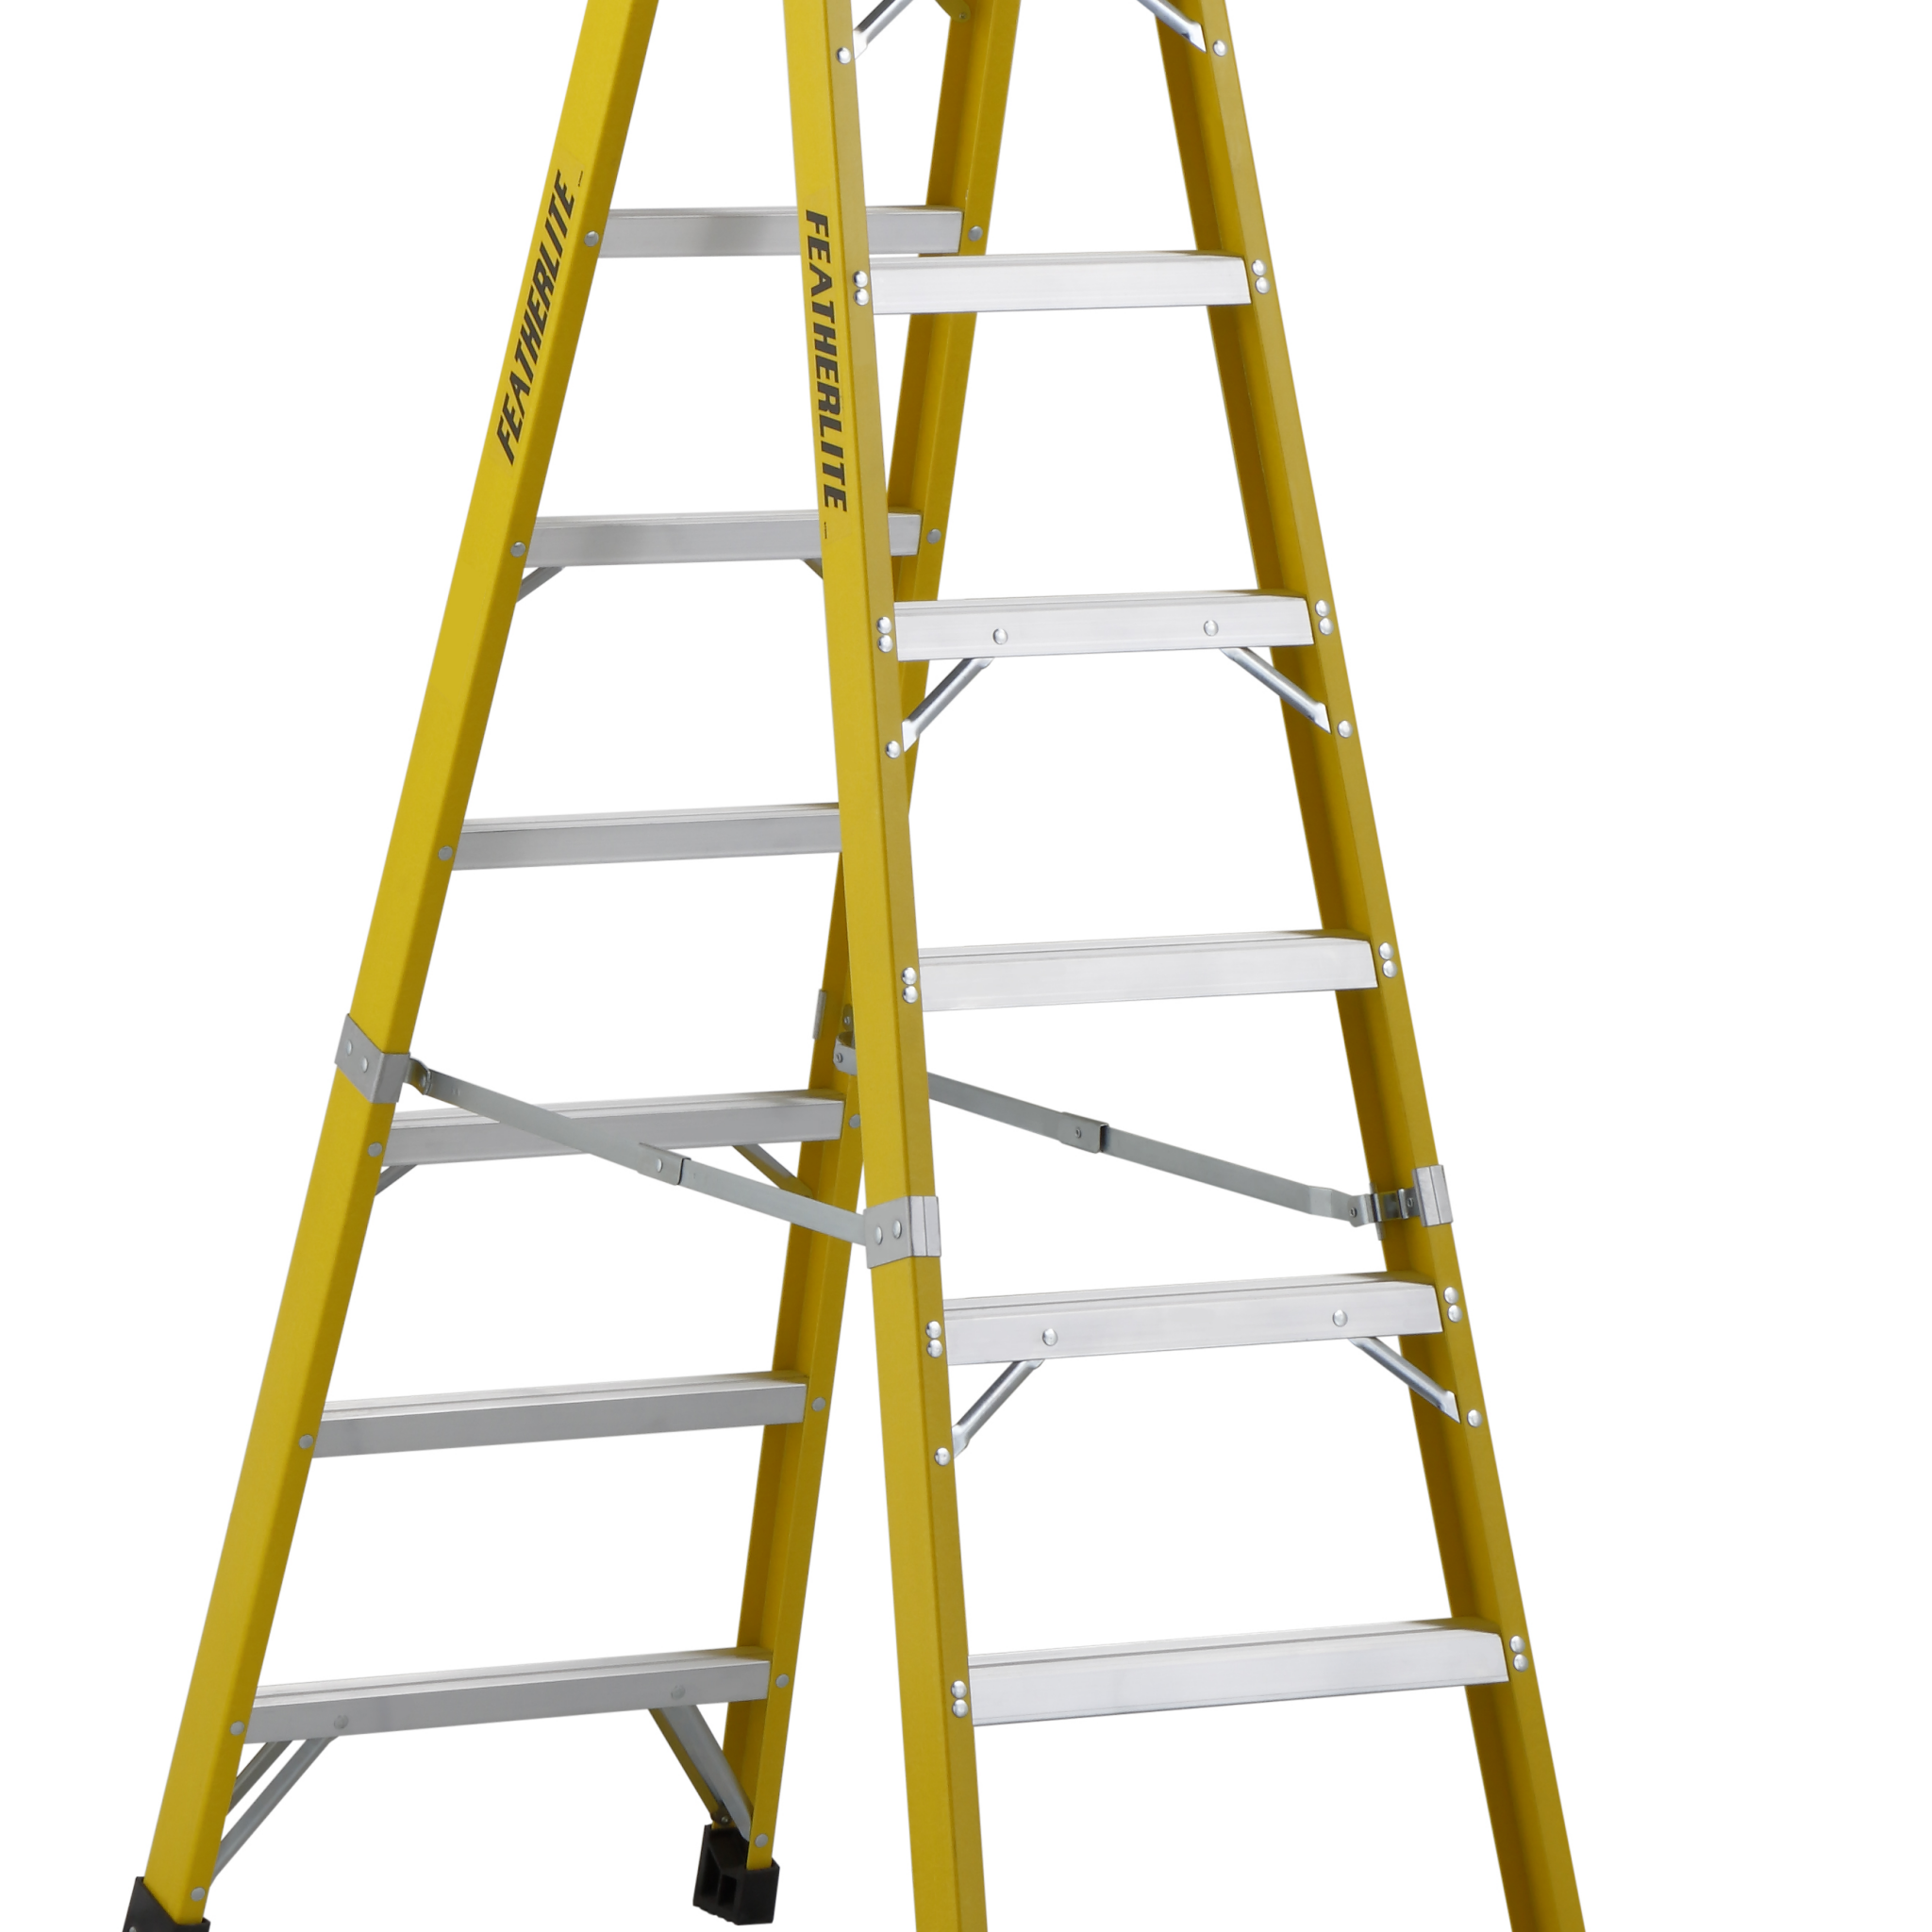 8' Extra Heavy Duty 2 Way Step Ladder #6608